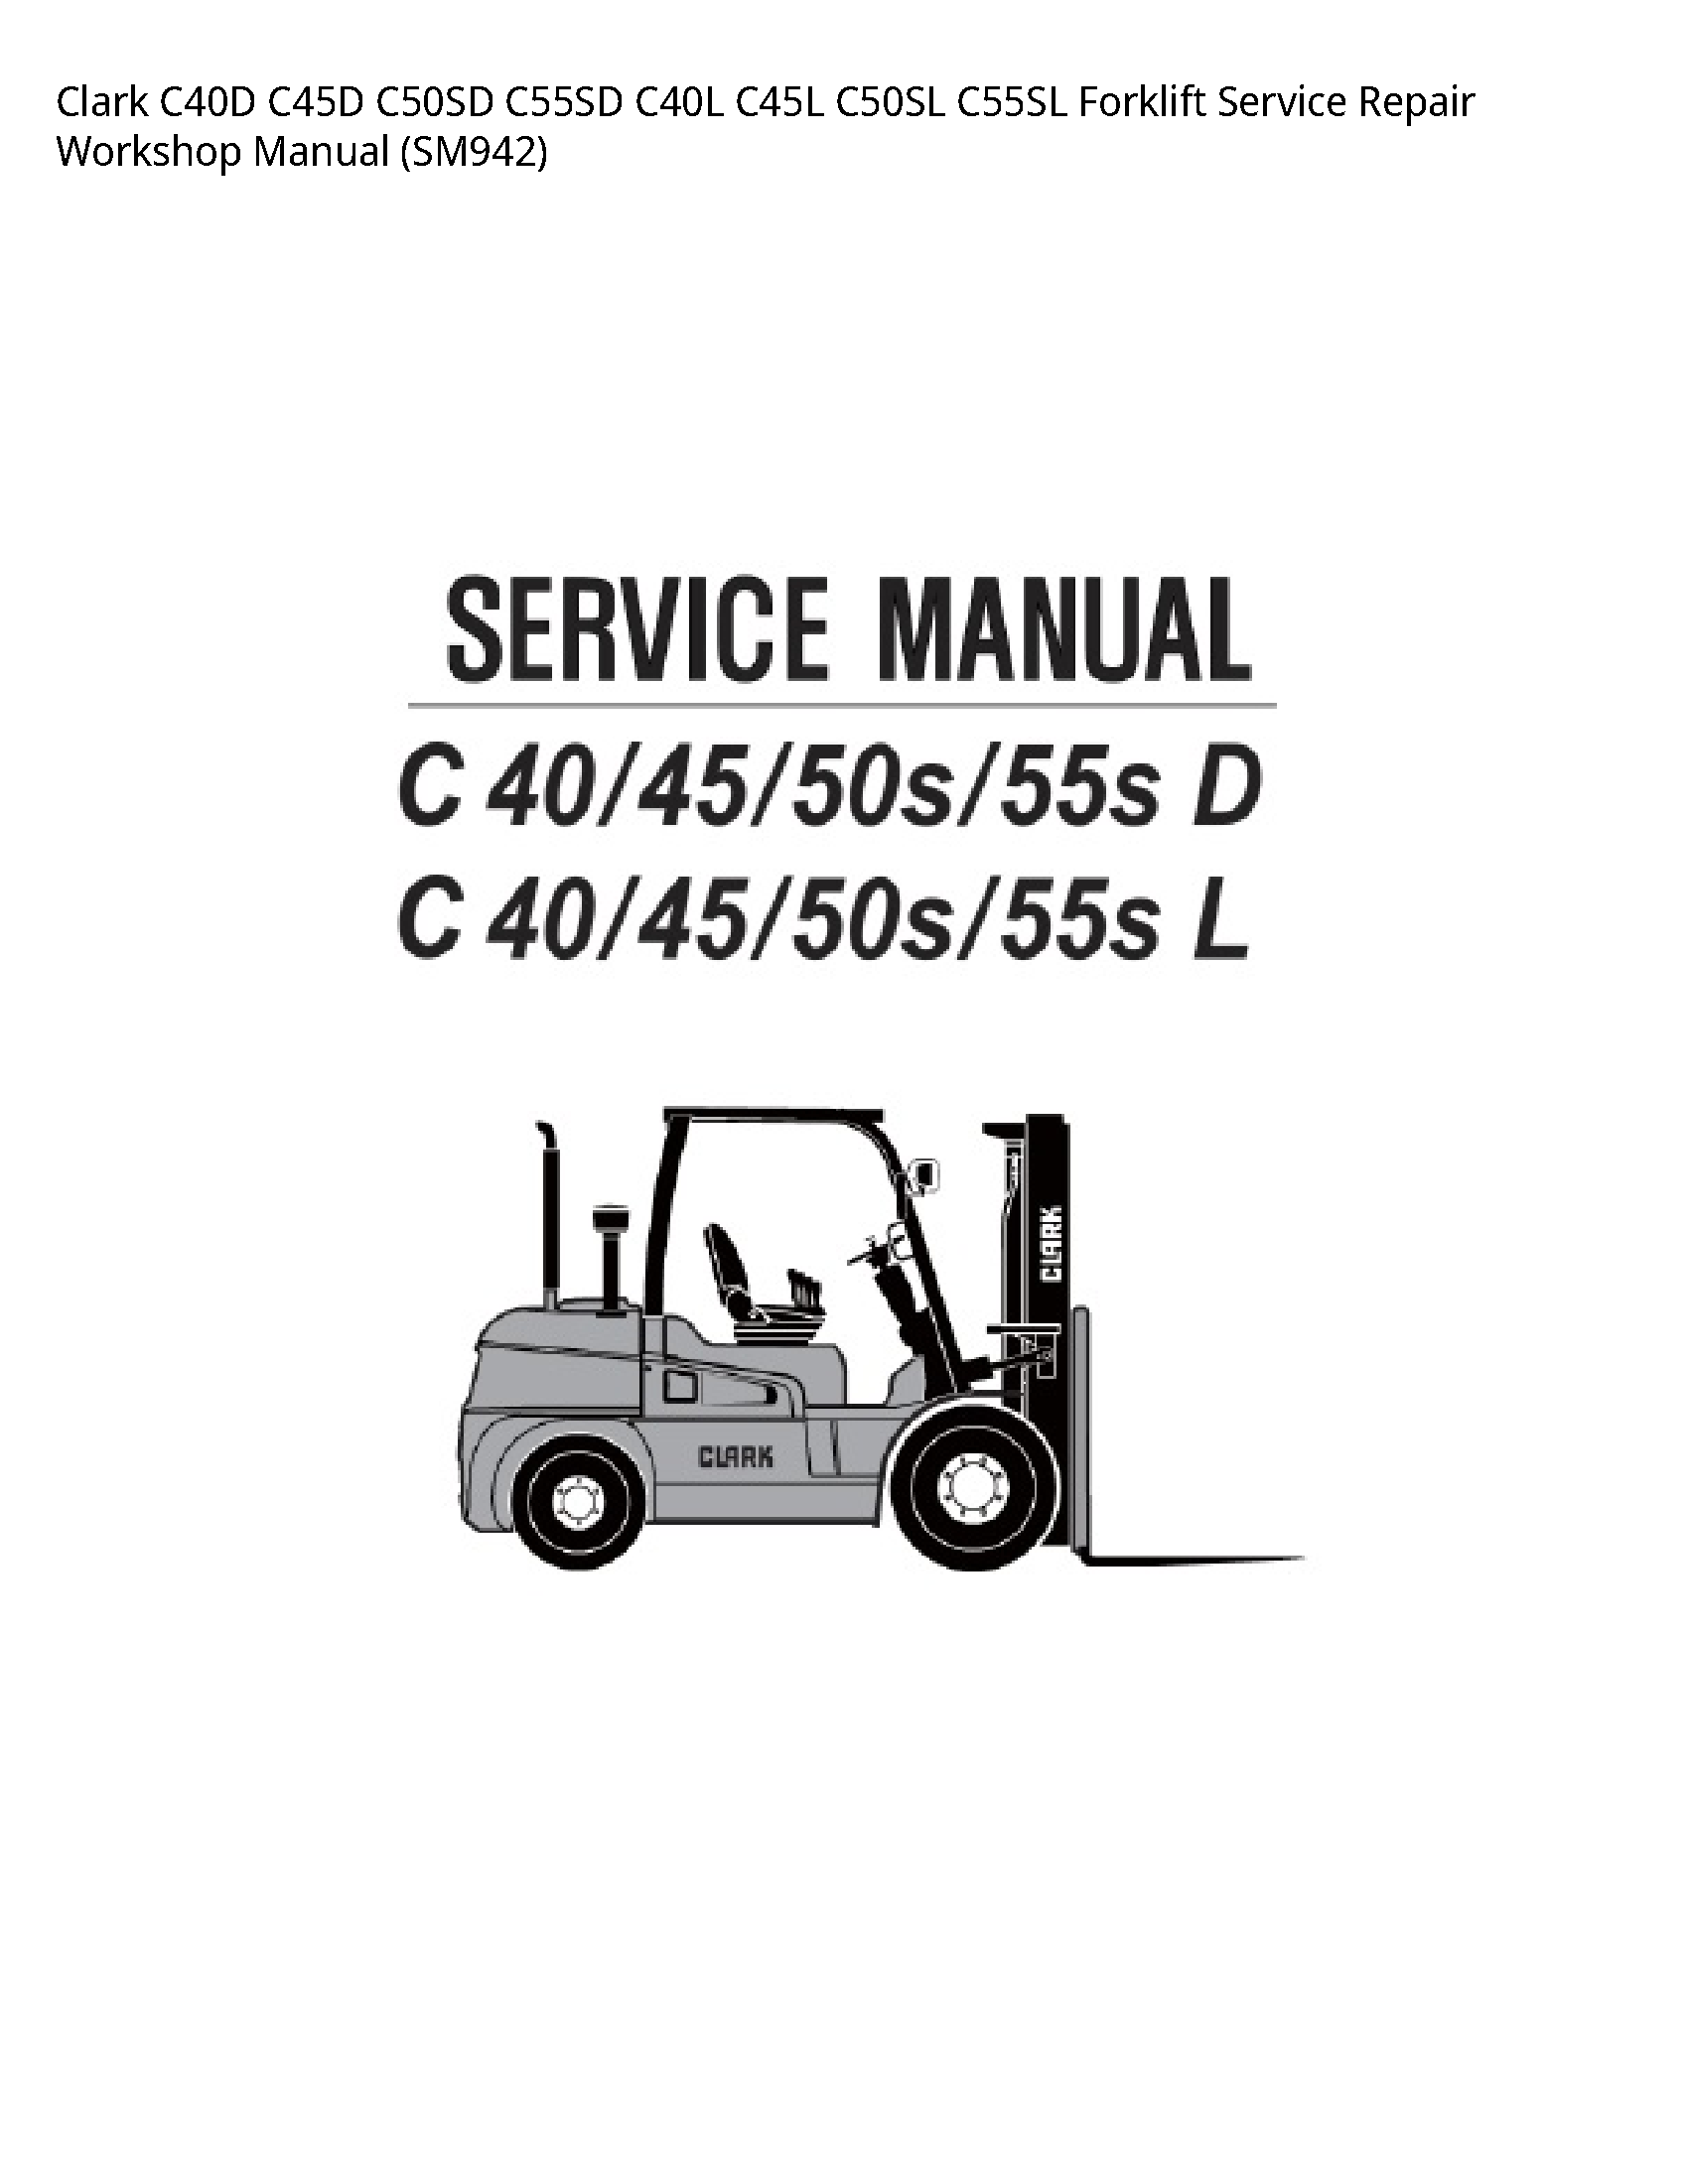 Clark C40D Forklift manual